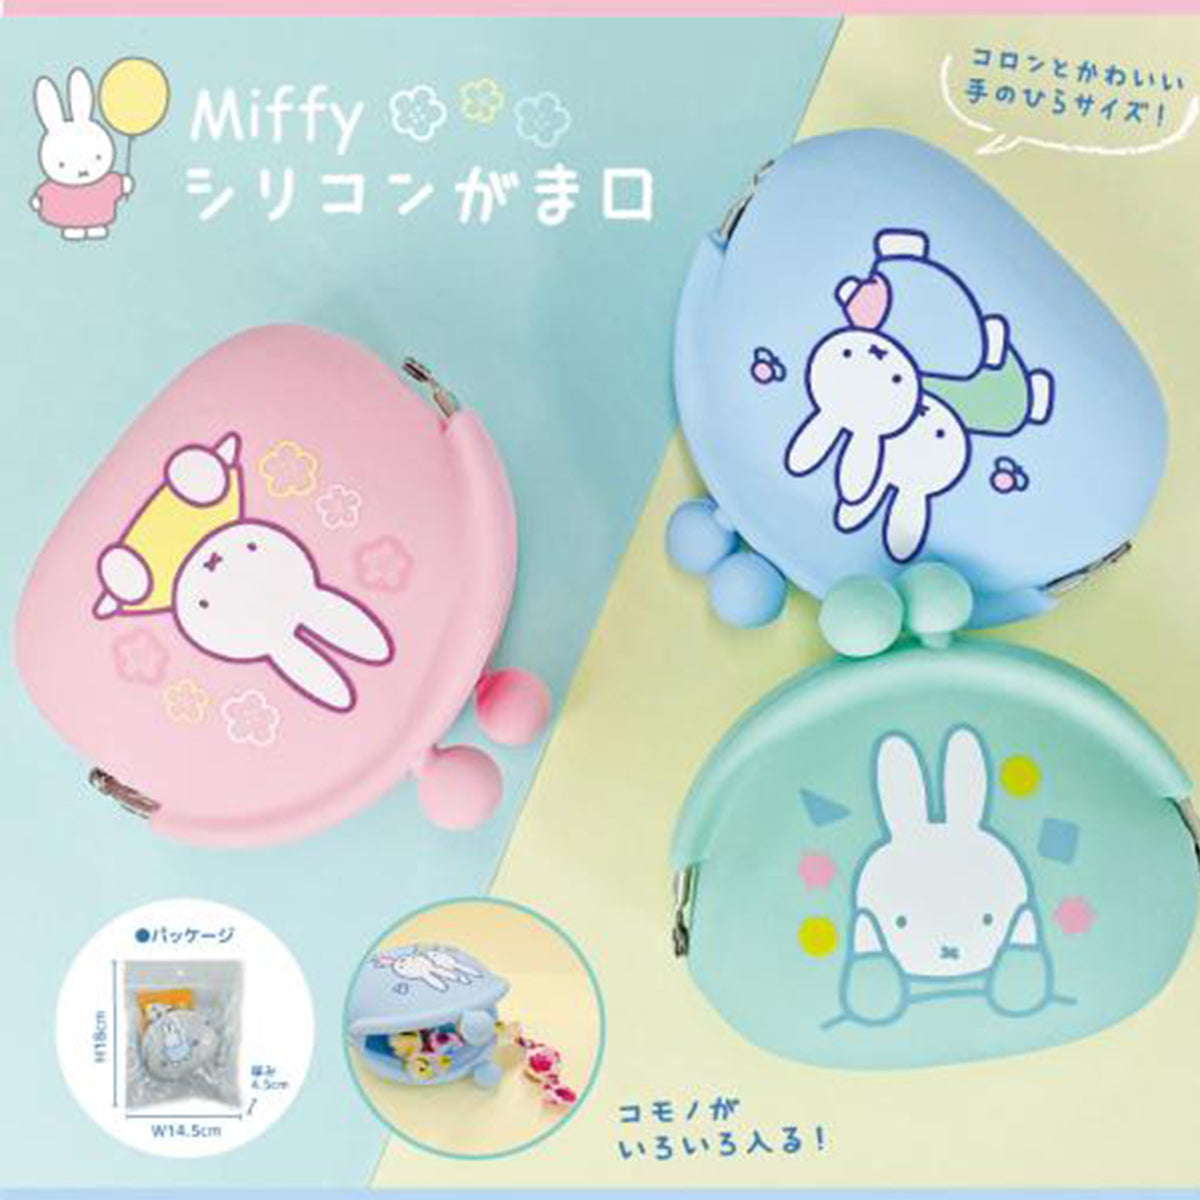 Coin Bag - Miffy Silicon (Japan Edition)